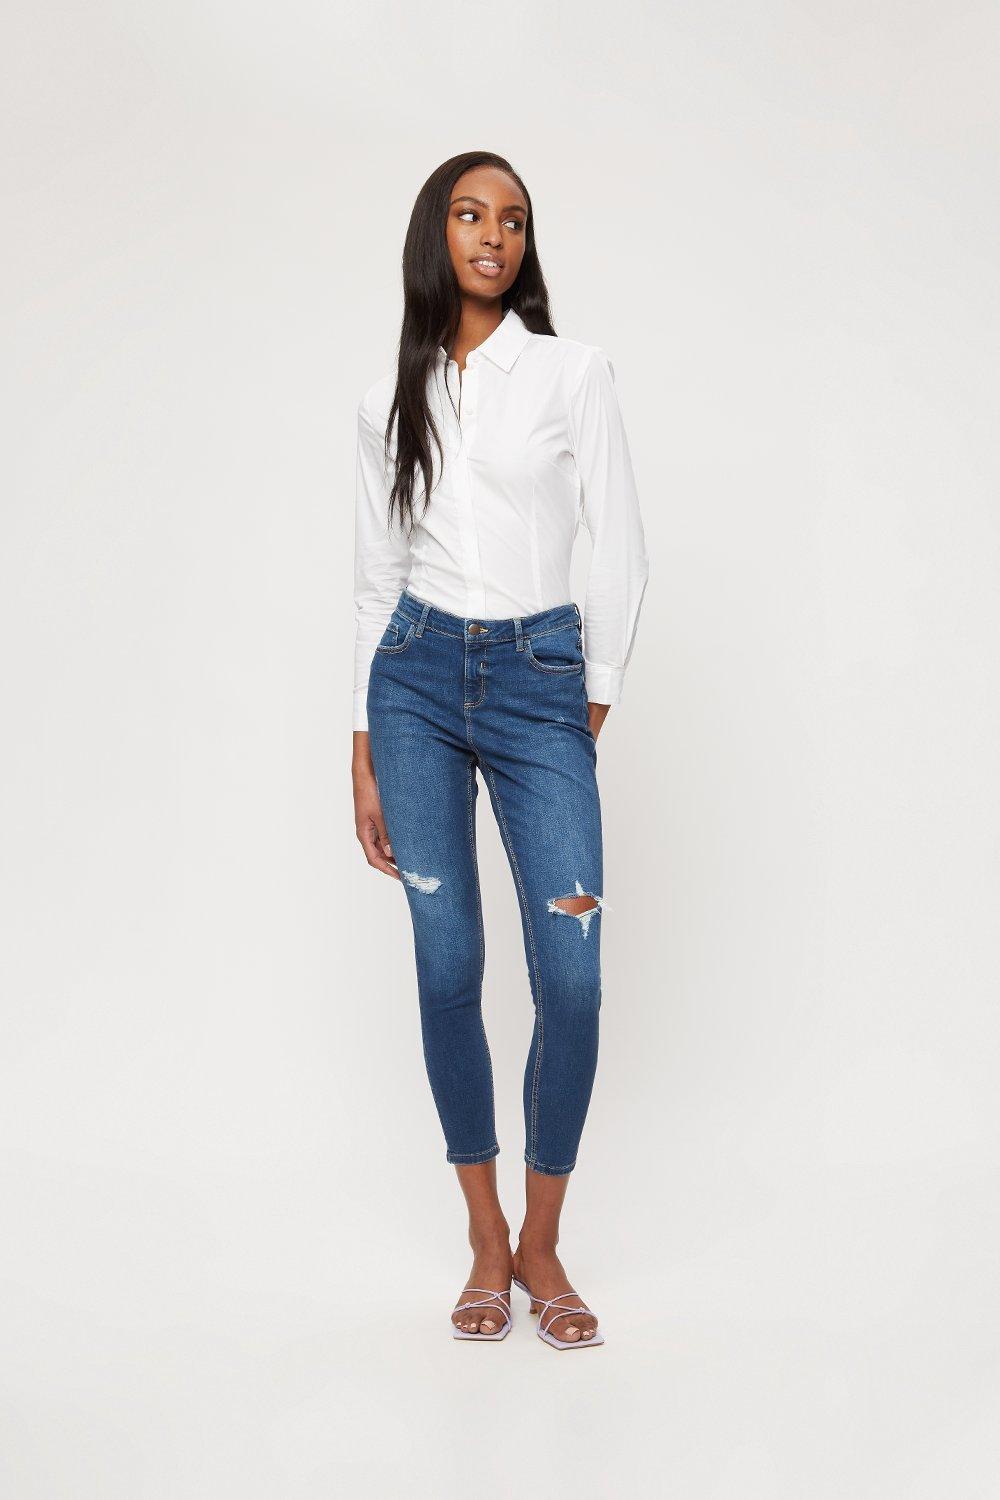 jeans | Indigo Rip Knee Darcy Jeans | Dorothy Perkins